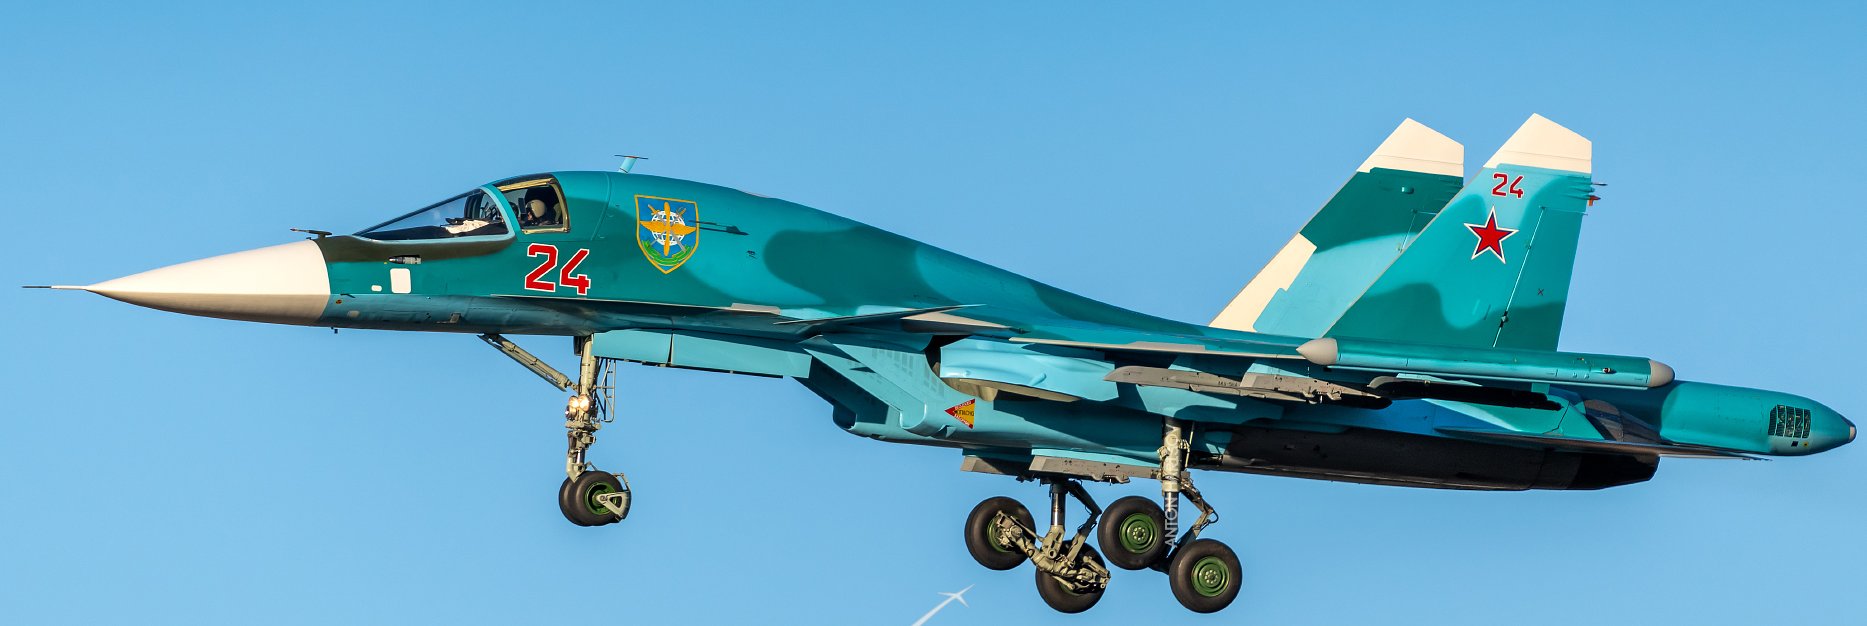 Су-34 ПКС РФ з номером №24